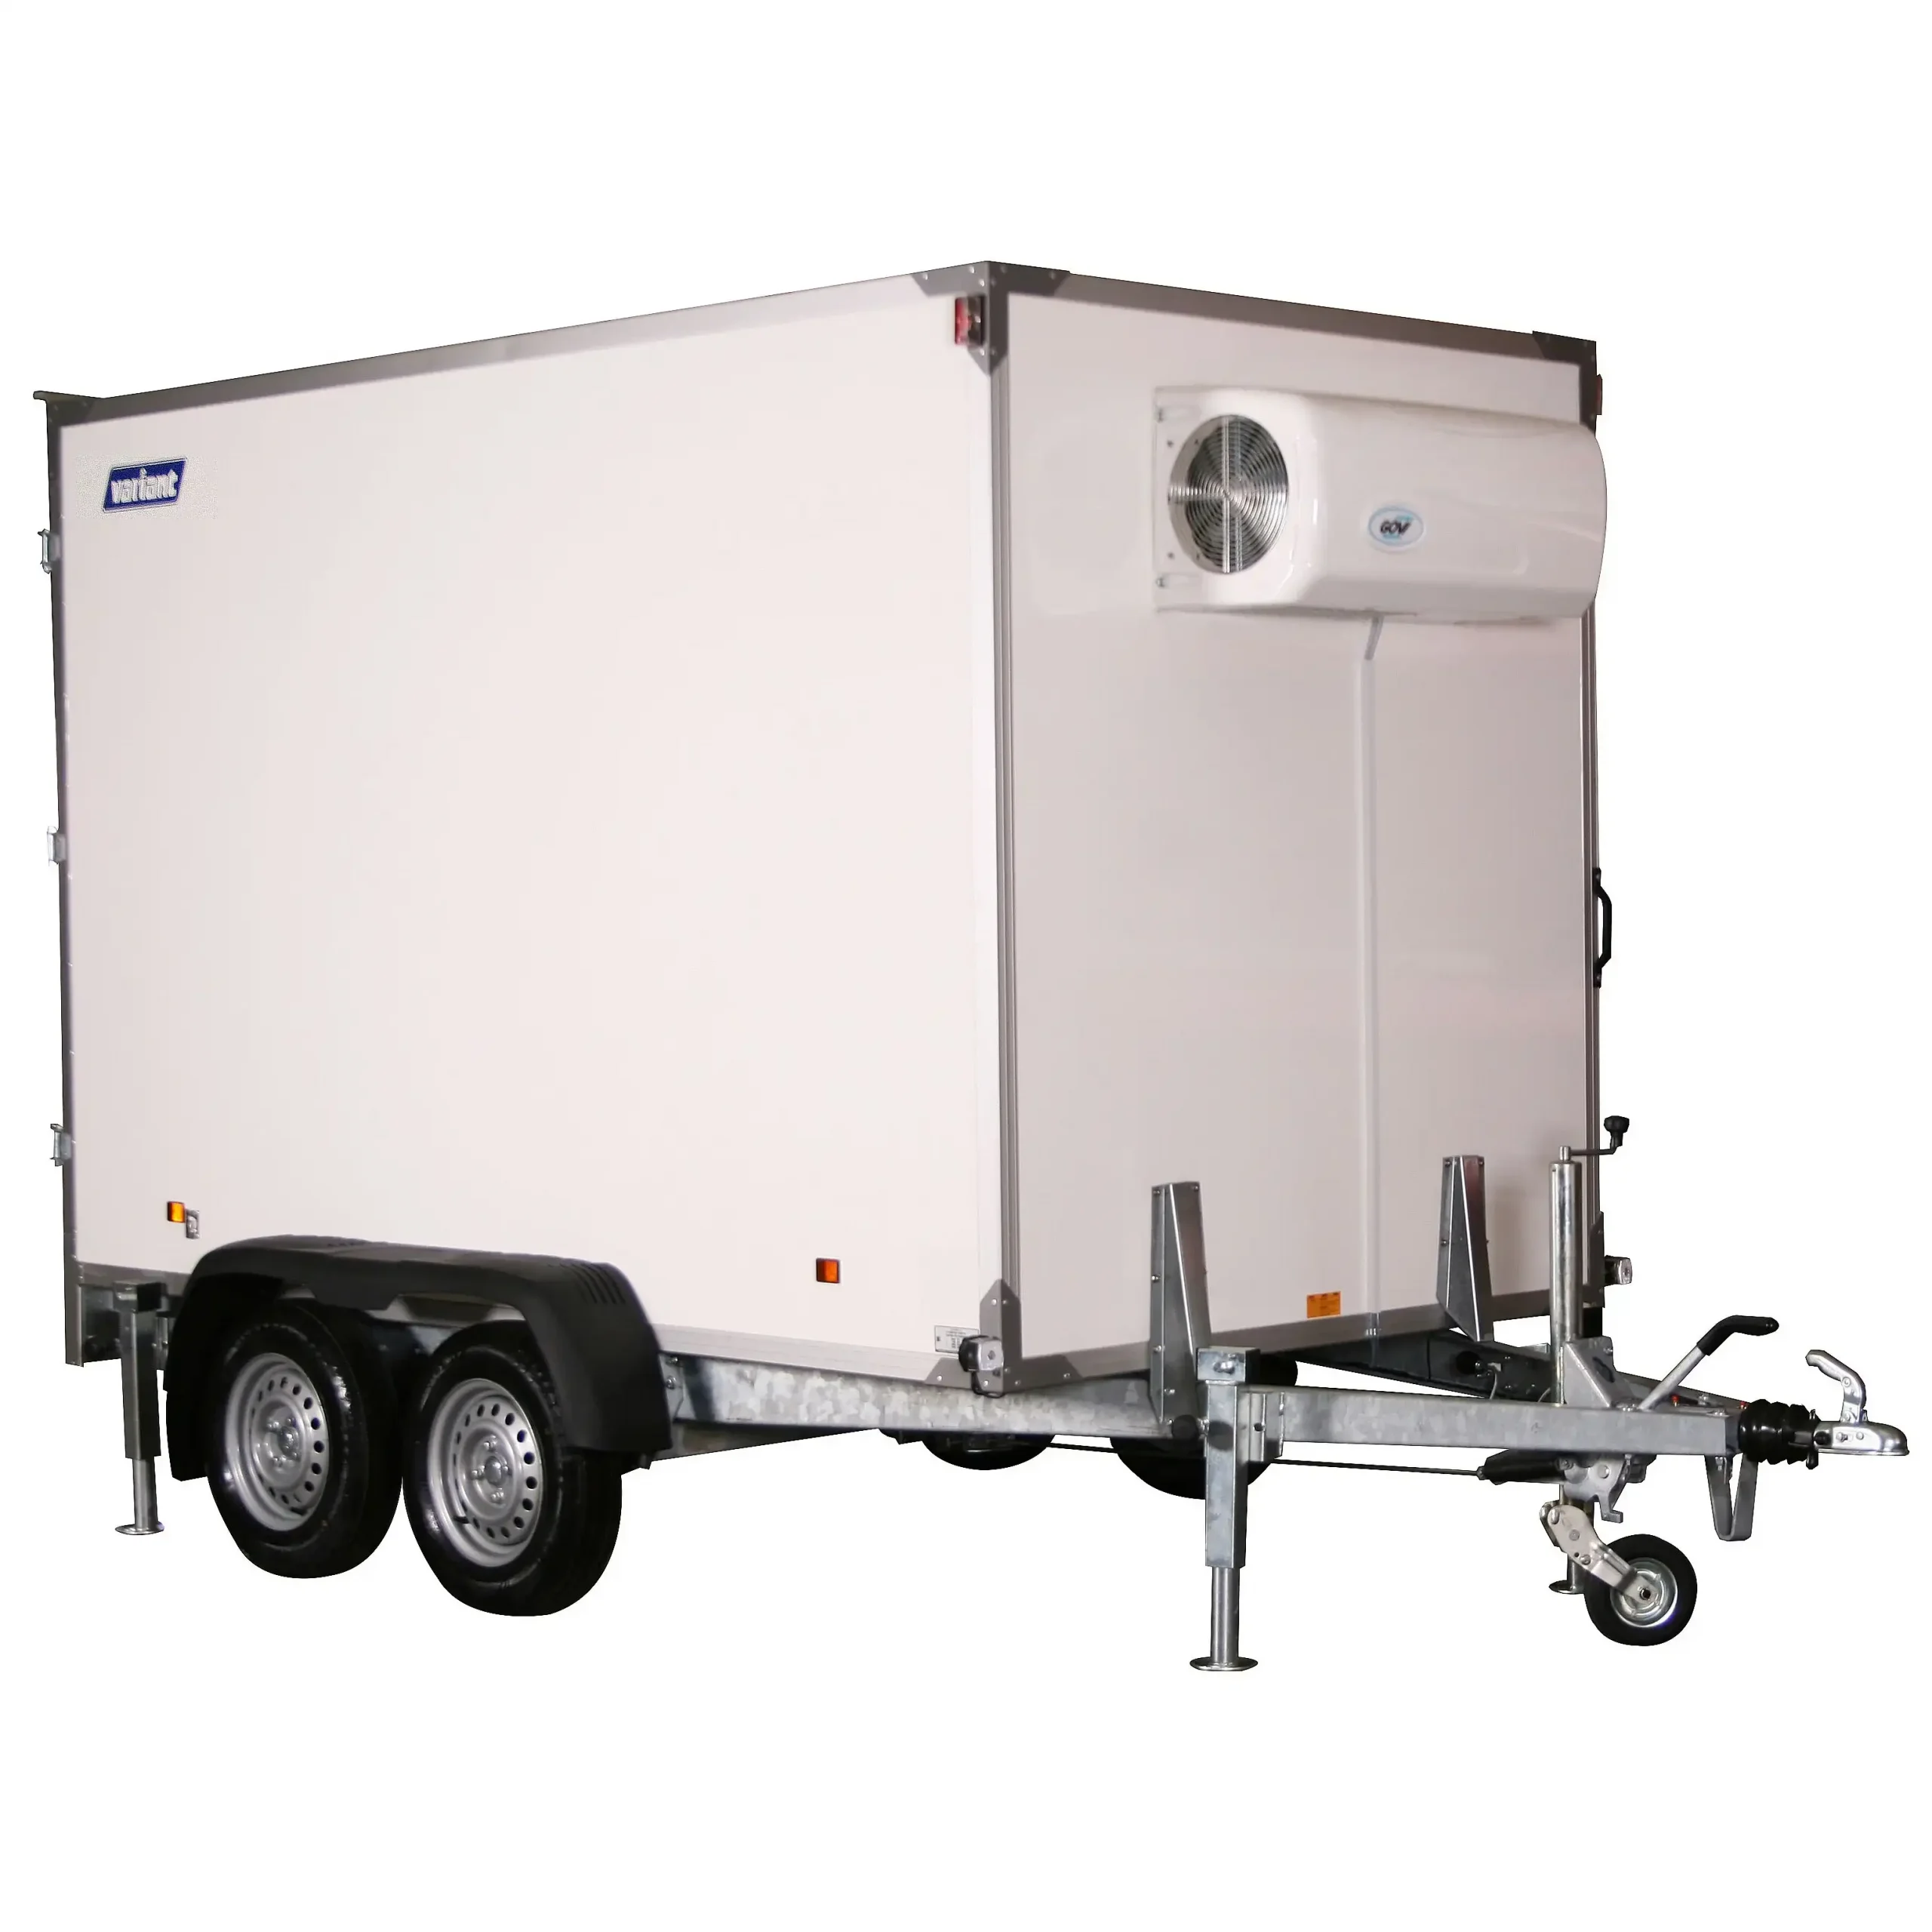 Variant large freezer trailer - high capacity with Govi